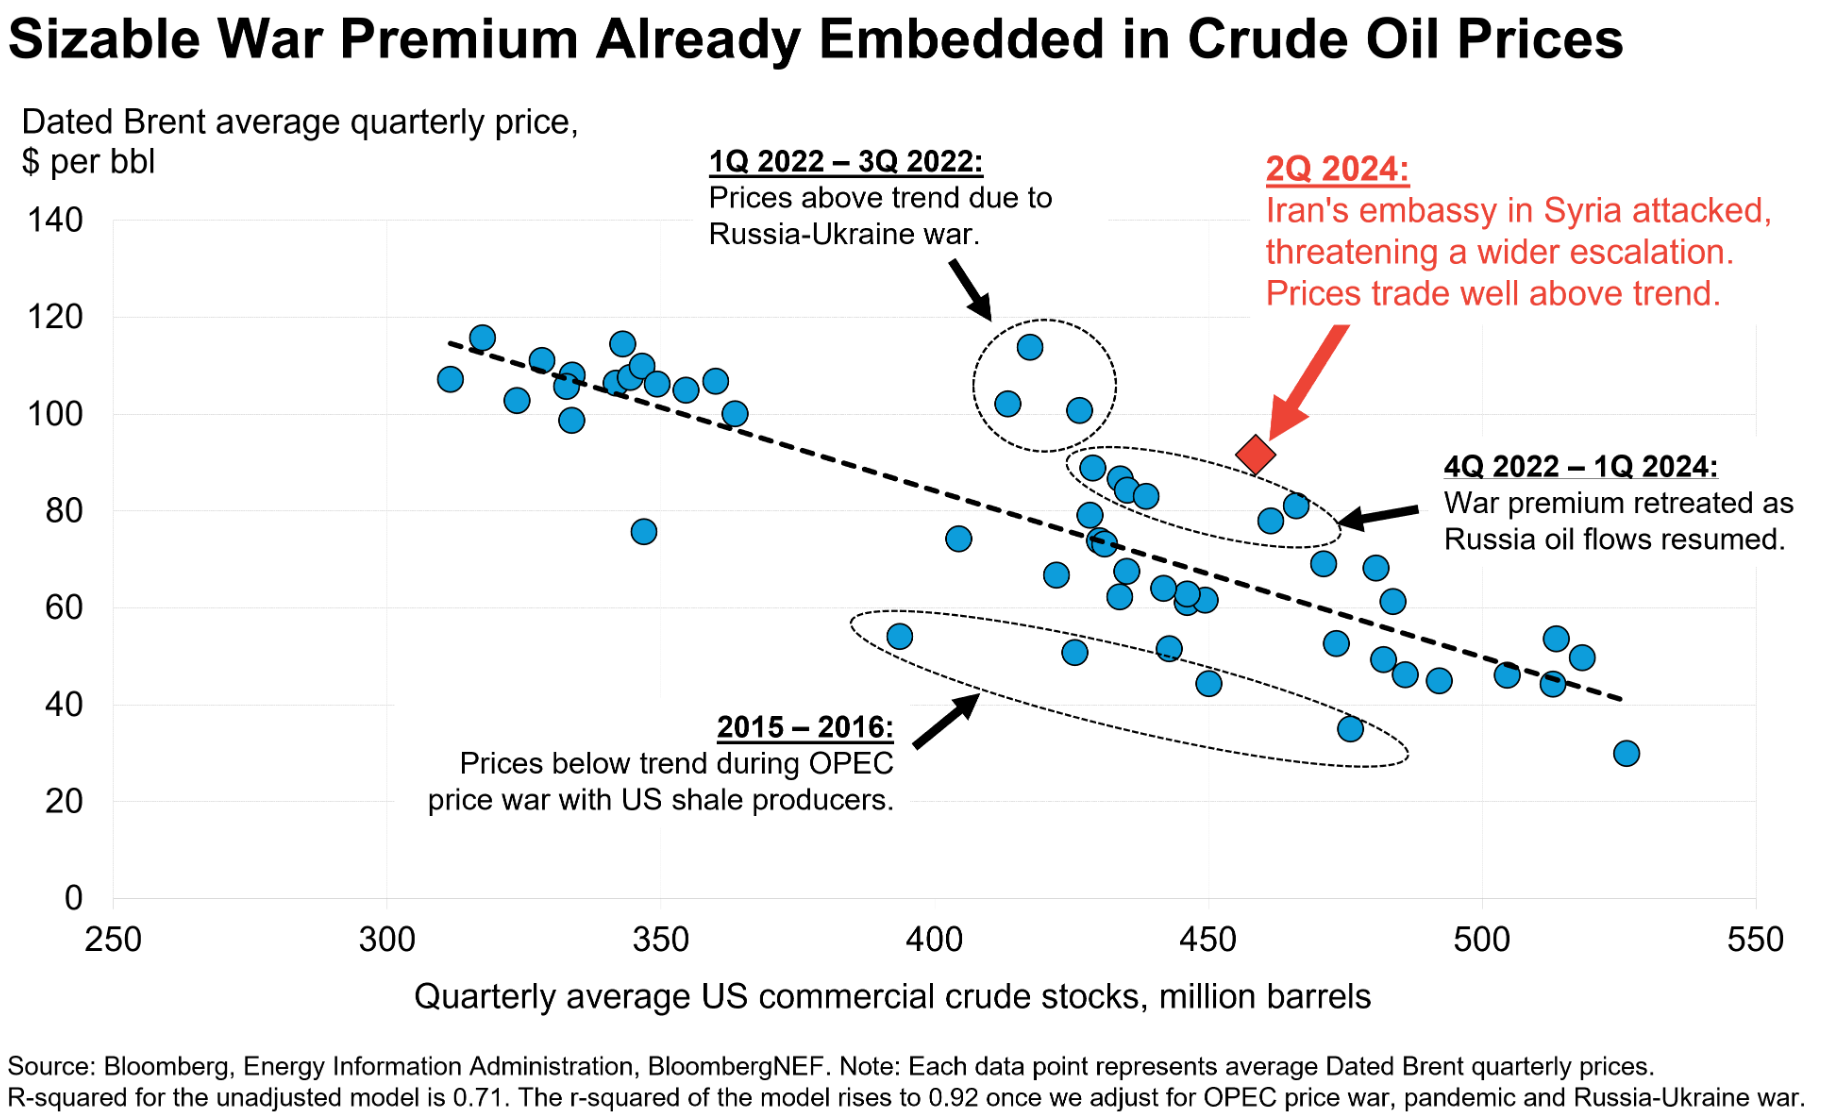 Impact of war premium on oil prices